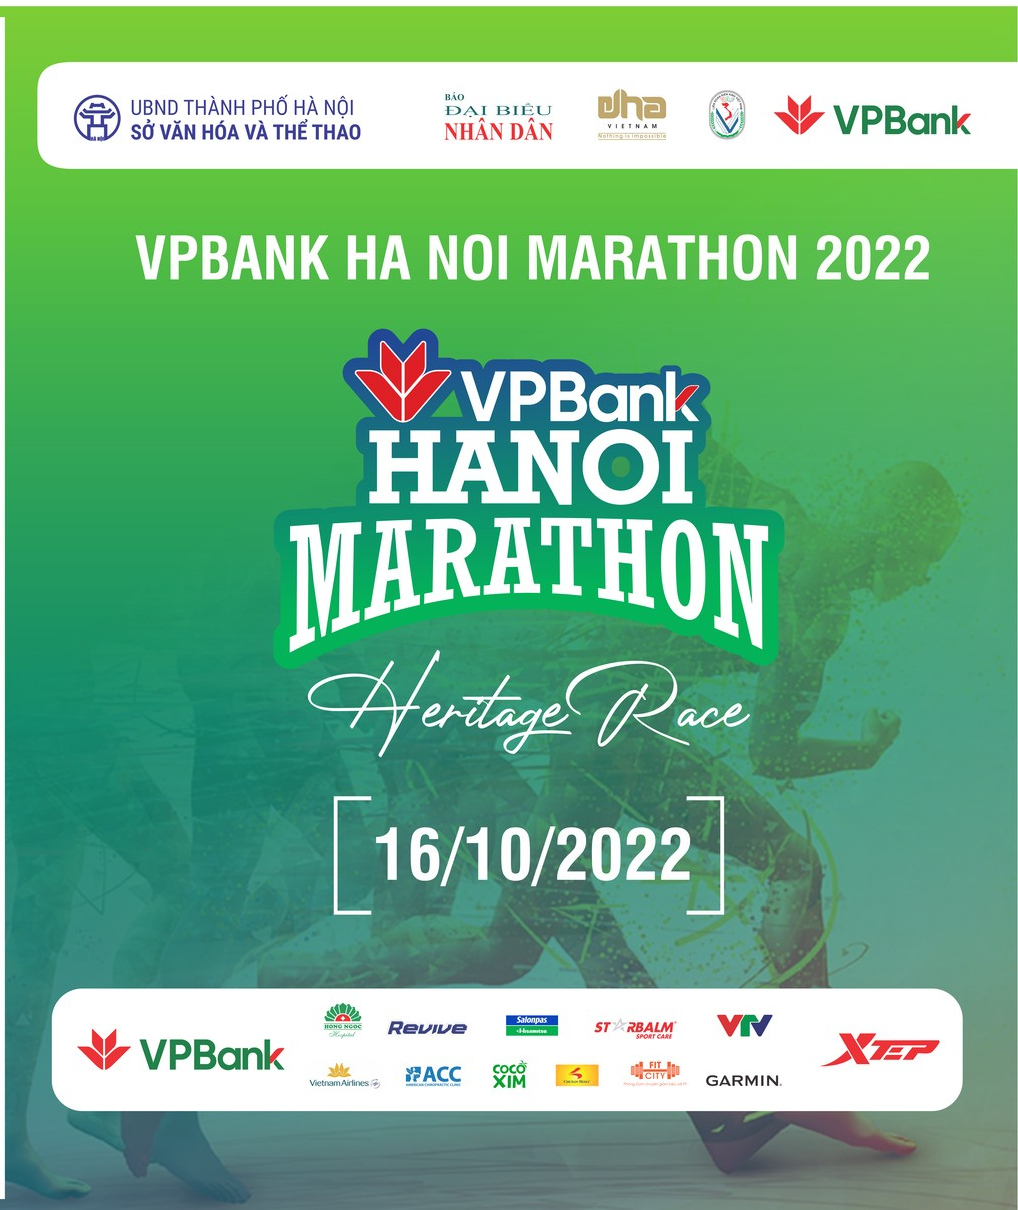 VPBank Hanoi Marathon Details COT For Each Track Section